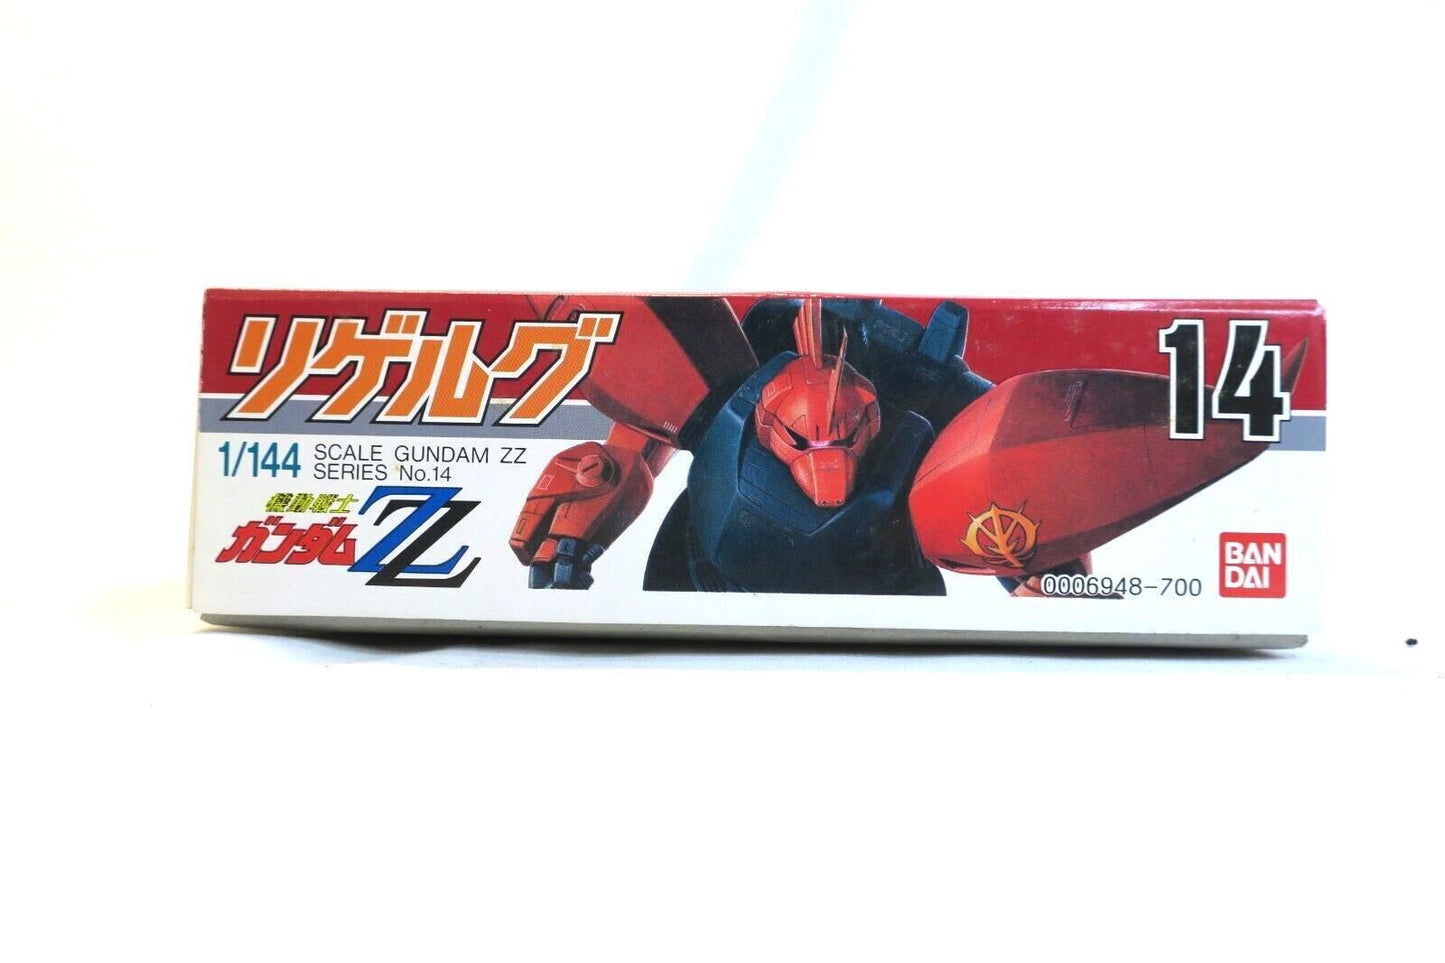 Bandai Vintage Gundam ZZ 1/144 Scale Series #14 MS-14J REGELGU 0006948 Kit C9